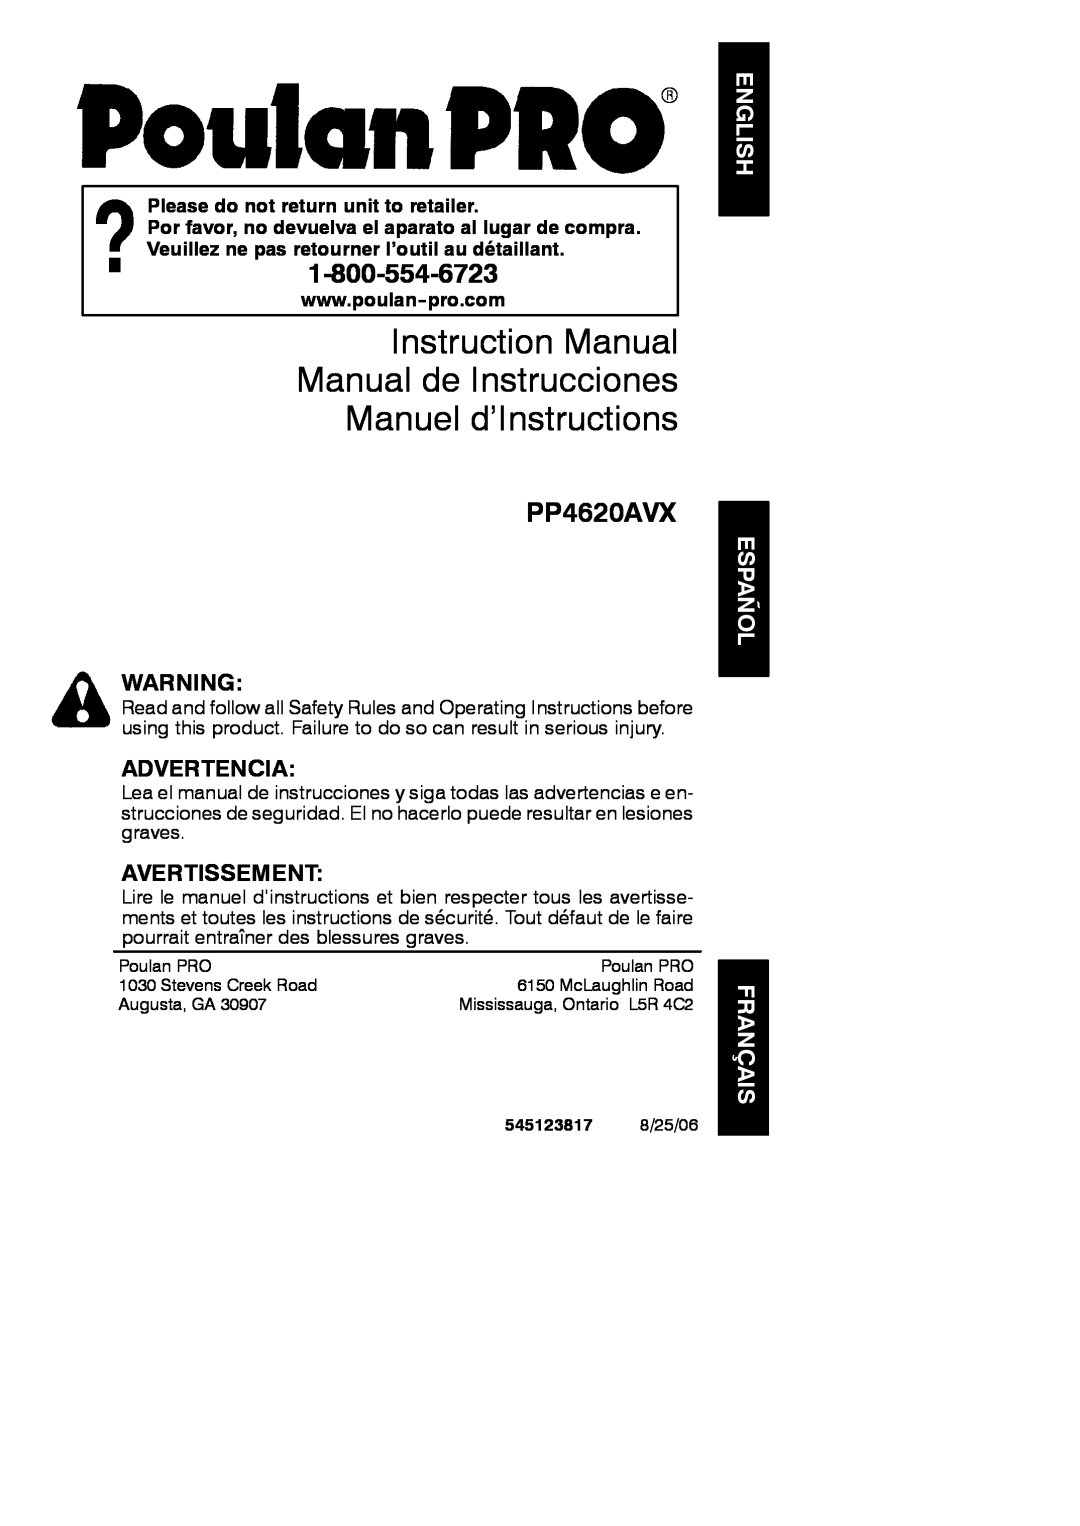 Poulan PP4620AVX instruction manual English Español Français, Advertencia, Avertissement 